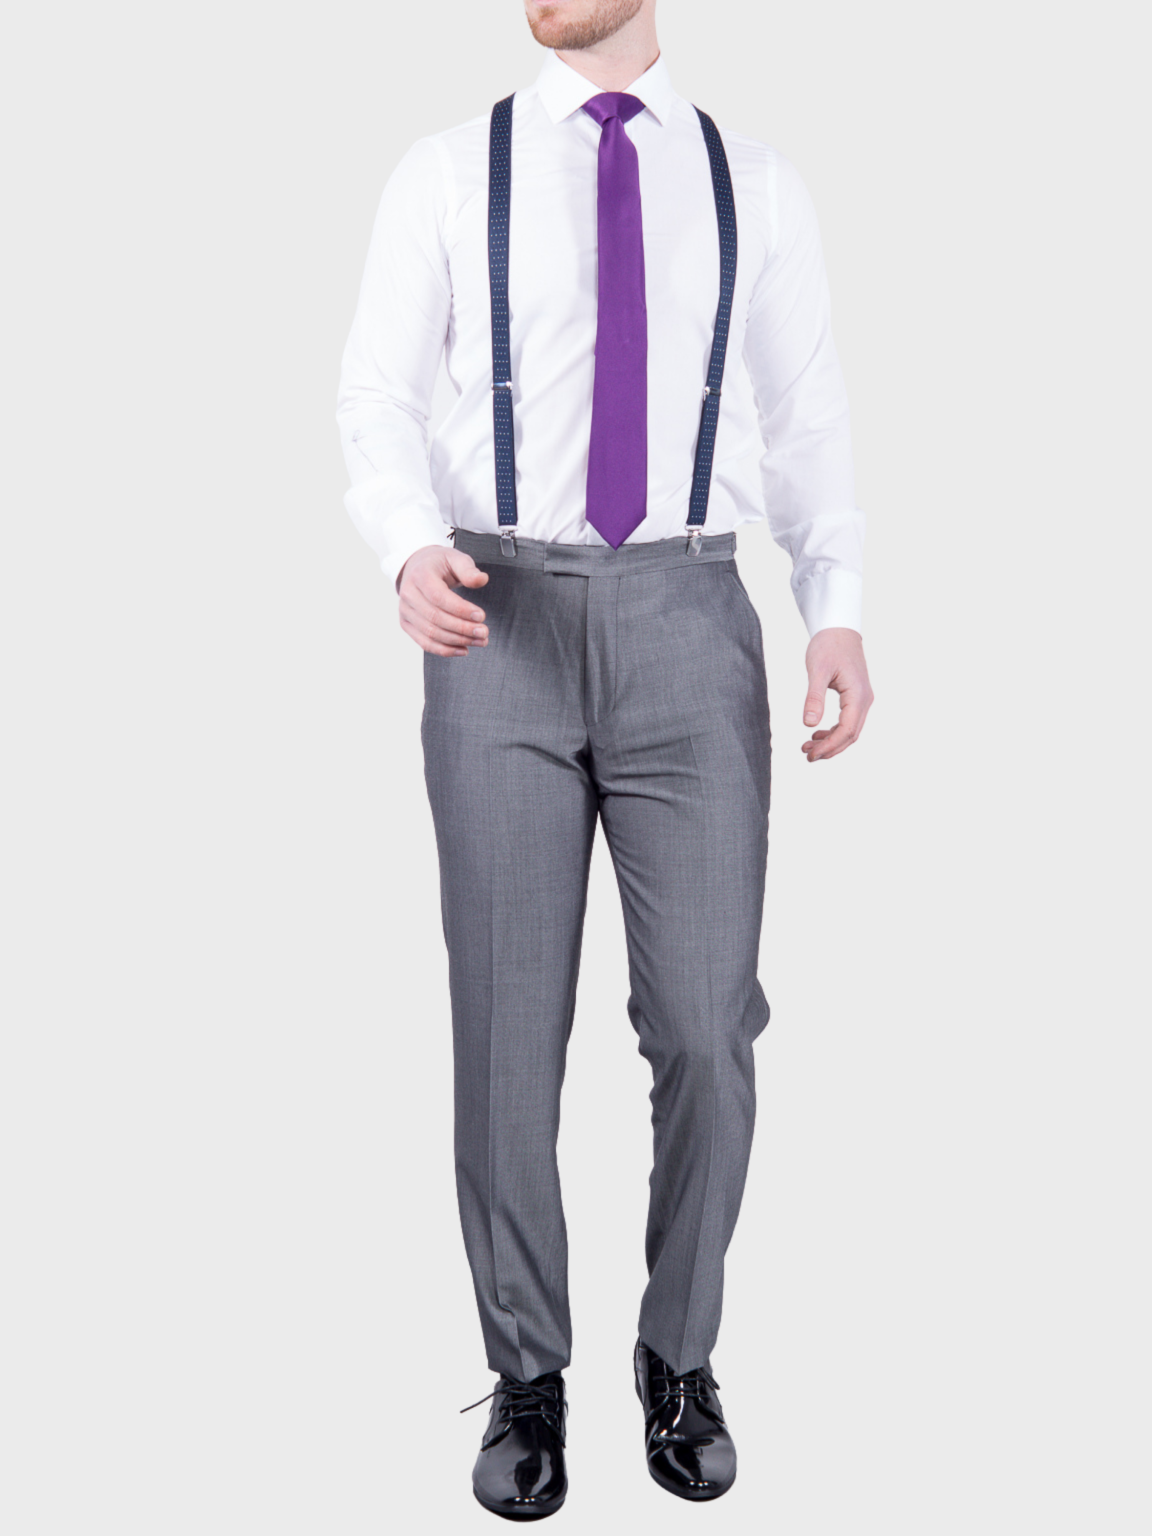 Mens Fashionably Retro Style Suit Shiny Silver with Black Trim + Match |  Nader Fashion Las Vegas